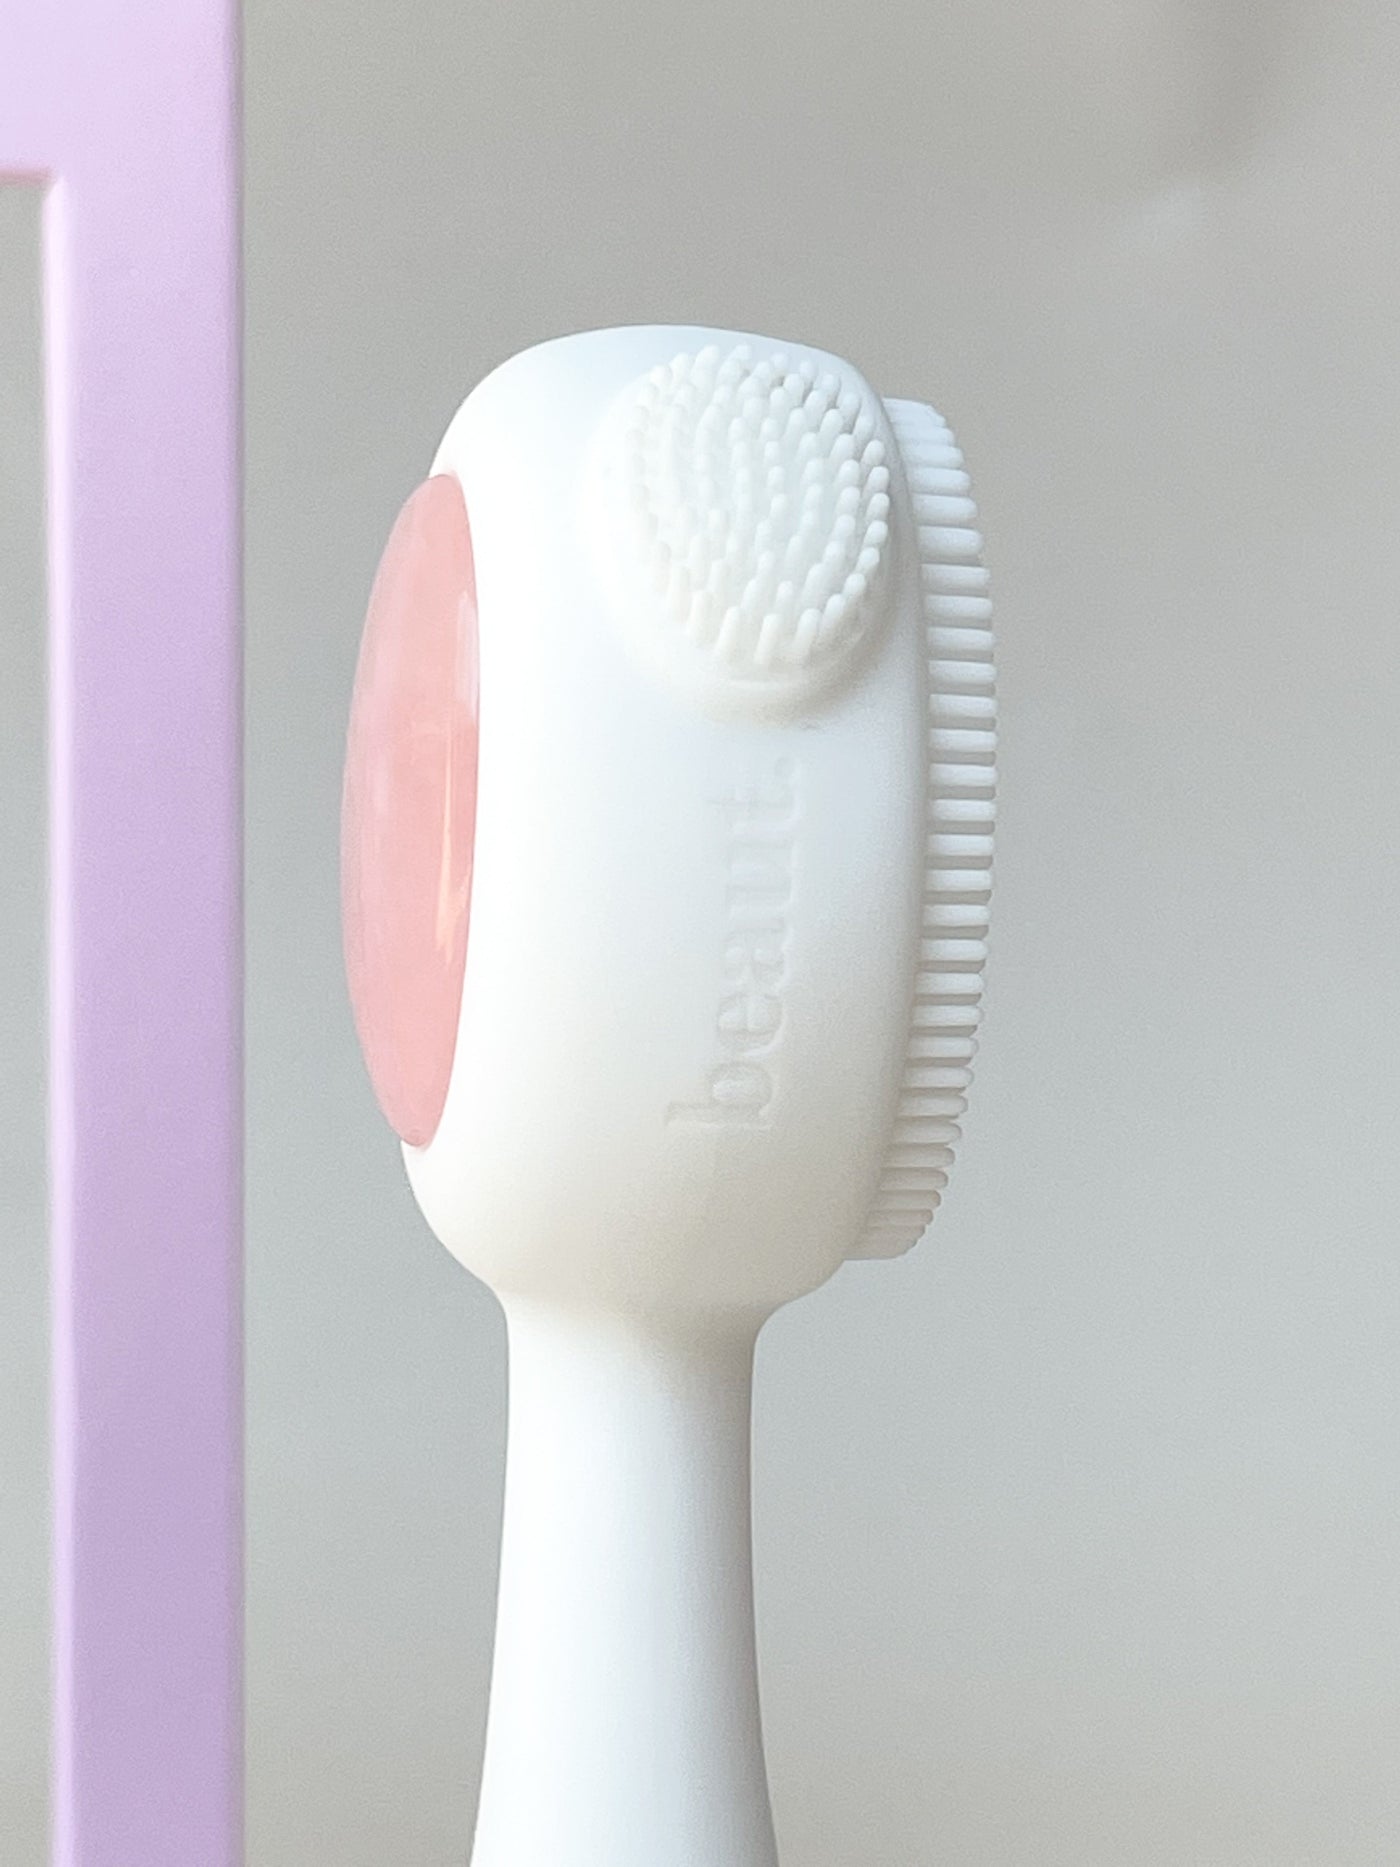 PREORDER Halo Kleen Facial Tool + FREE mini cleanse - NanaMacs